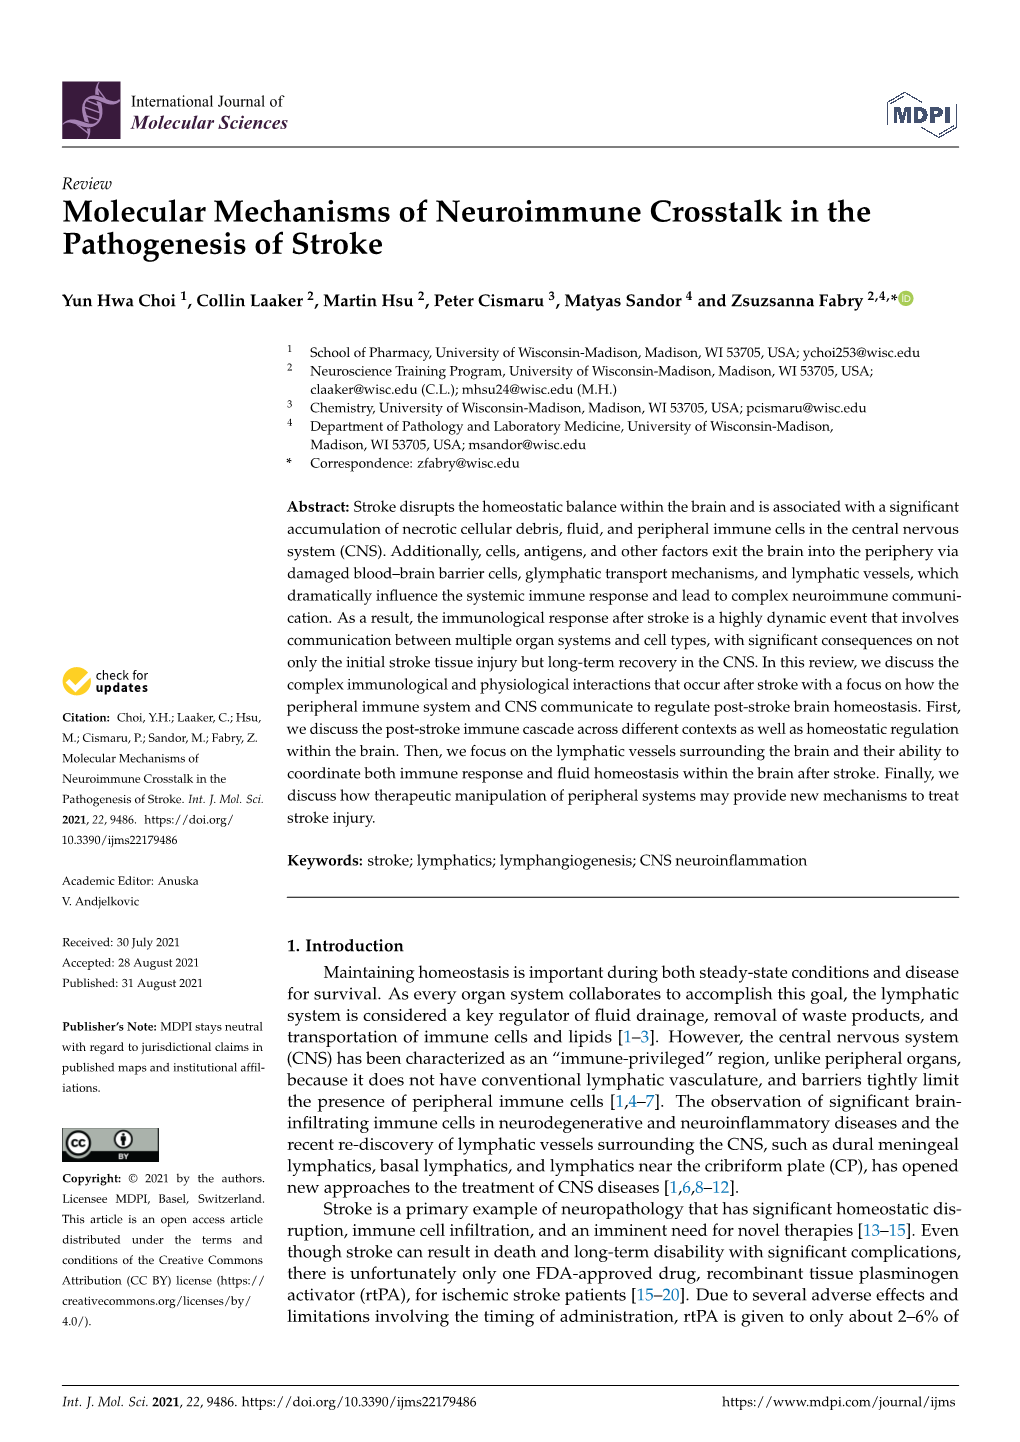 Molecular Mechanisms of Neuroimmune Crosstalk in the Pathogenesis of Stroke